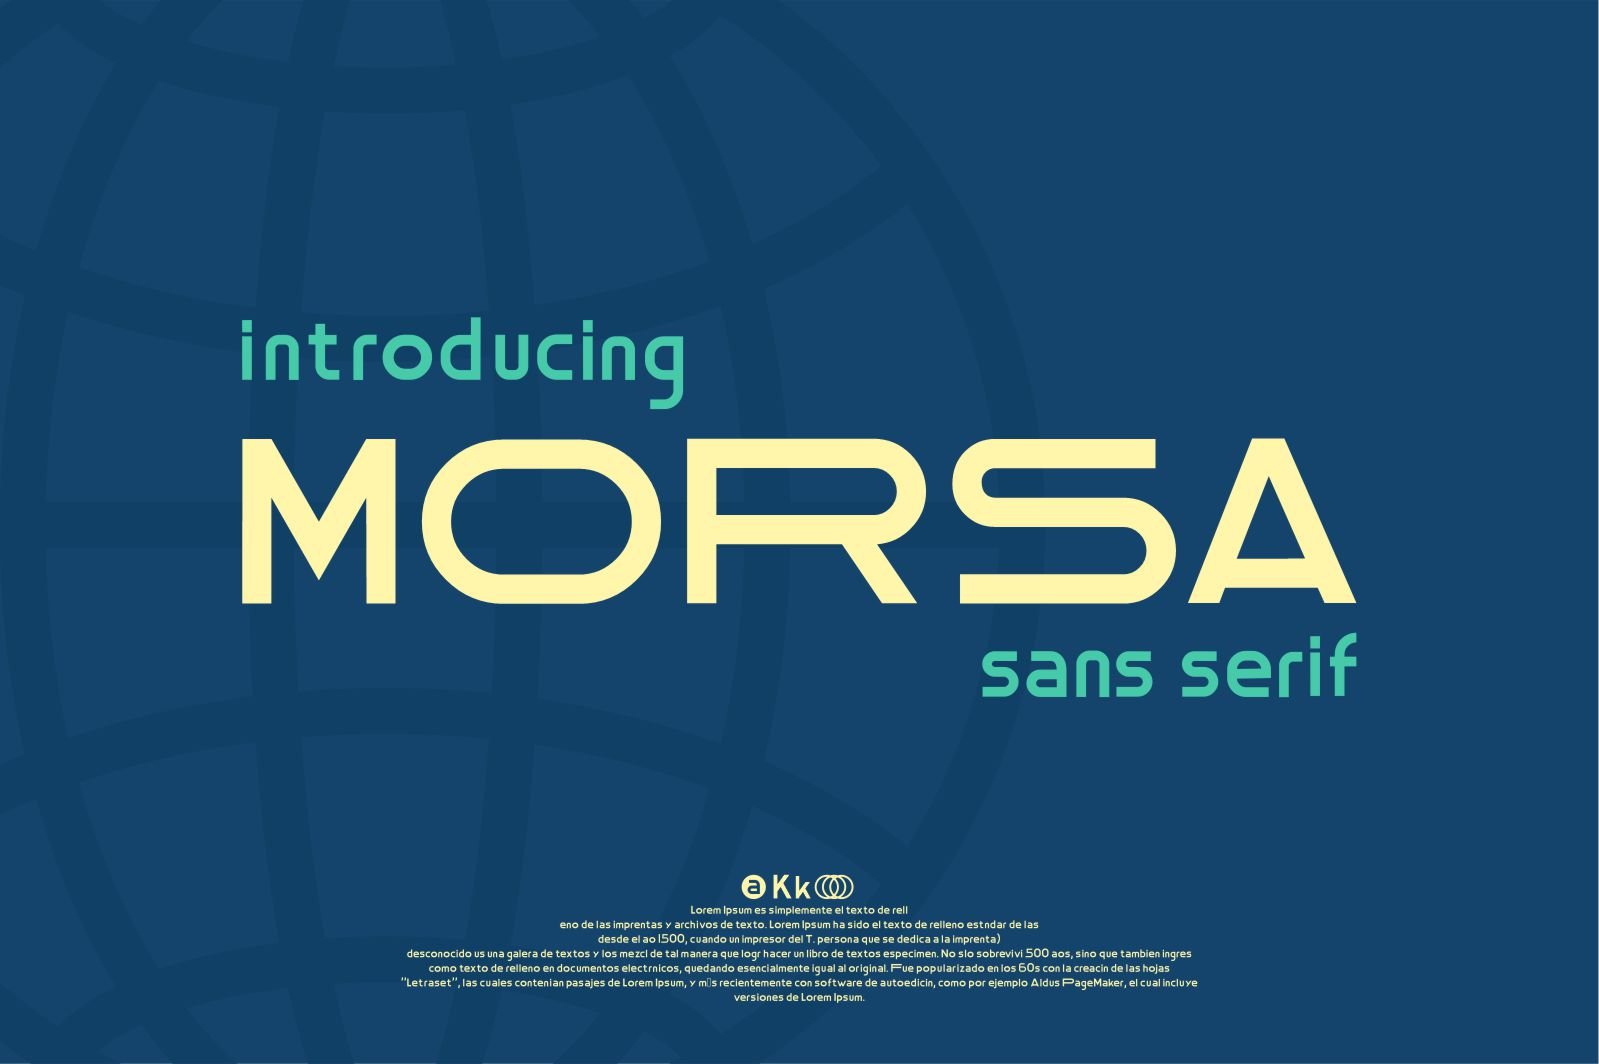 Morsa - Modern Space Font cover image.